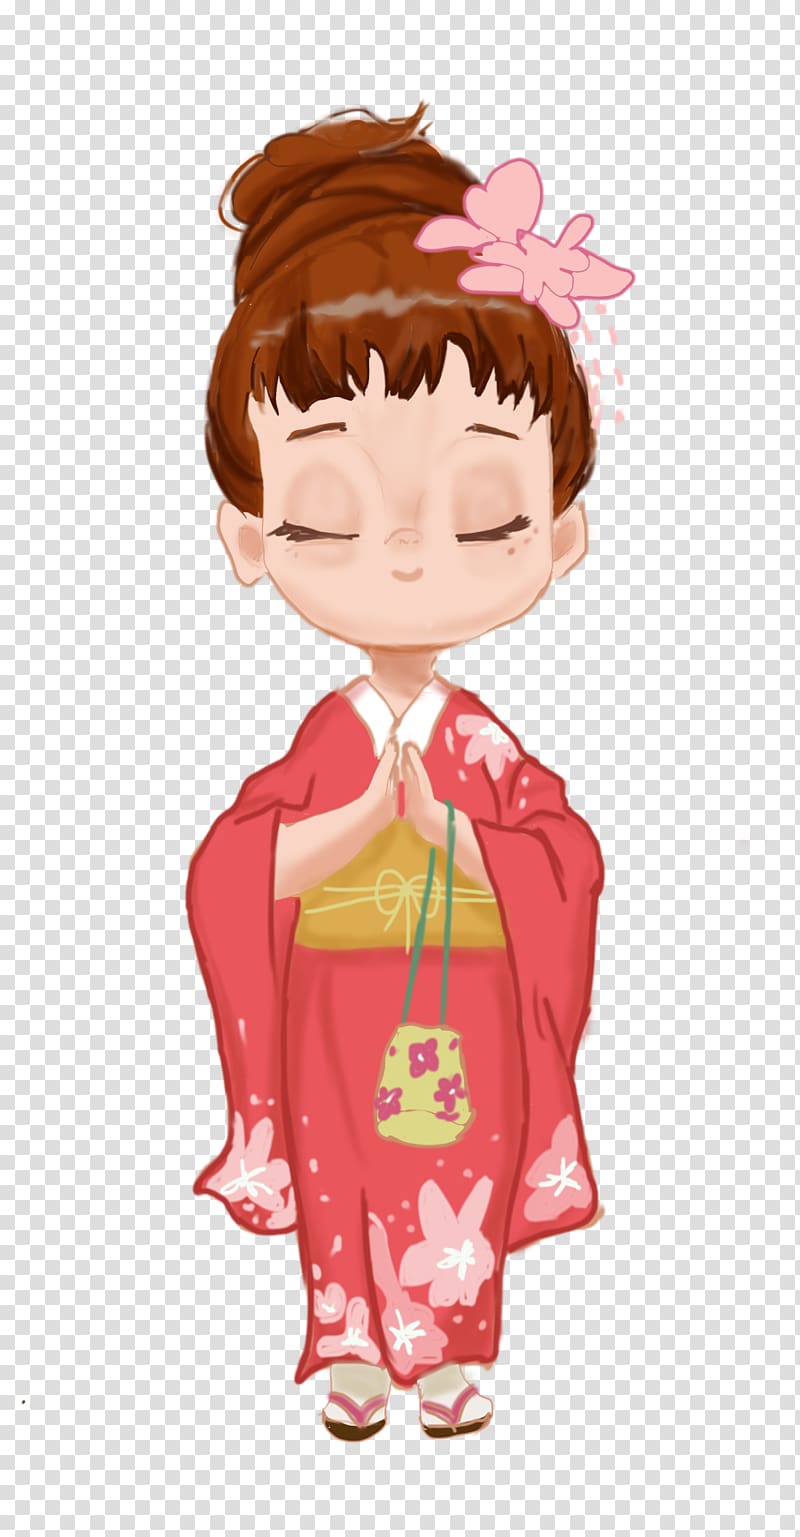 Kimono Poster Cartoon, Pink clothes women transparent background PNG clipart